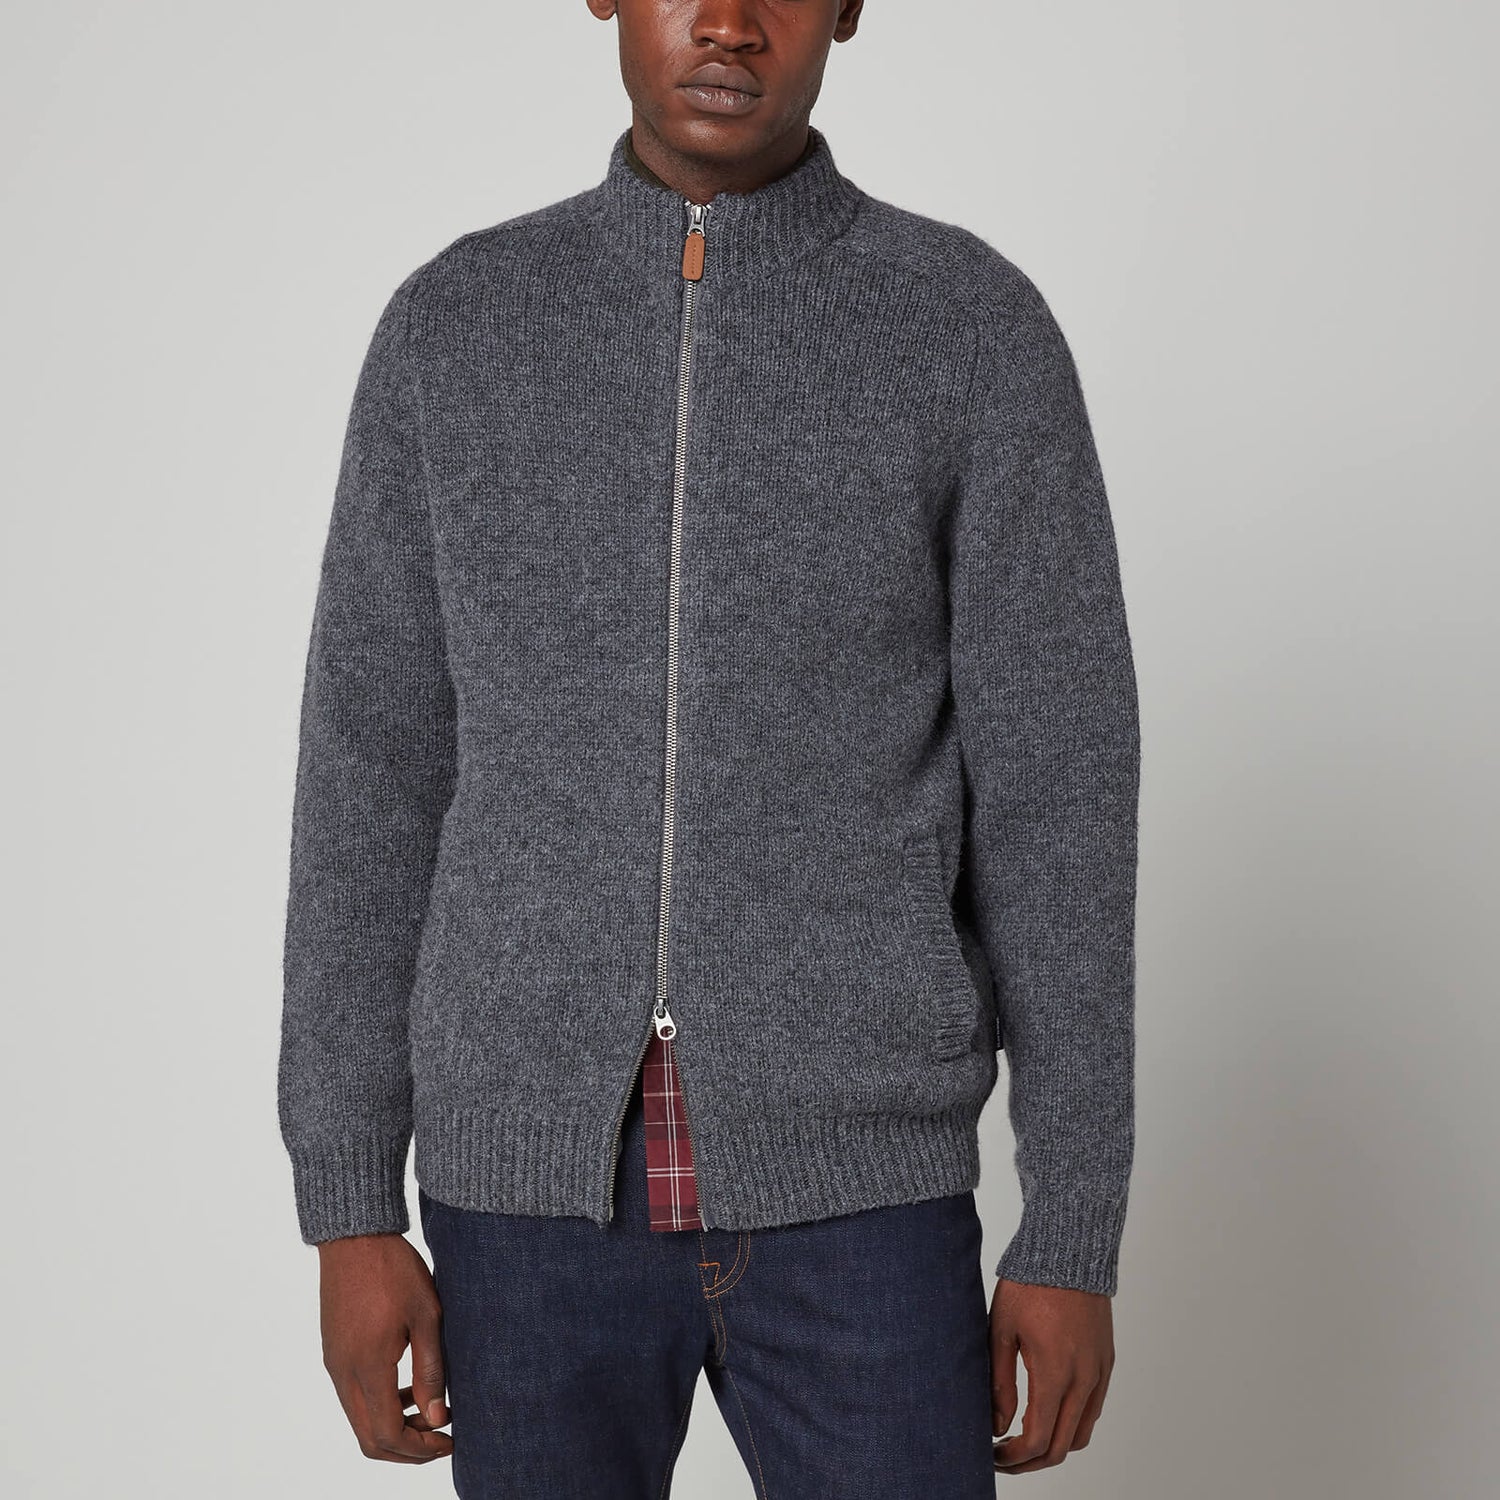 Barbour Men's Calder Knitted Zip Through Jacket - Charcoal Marl